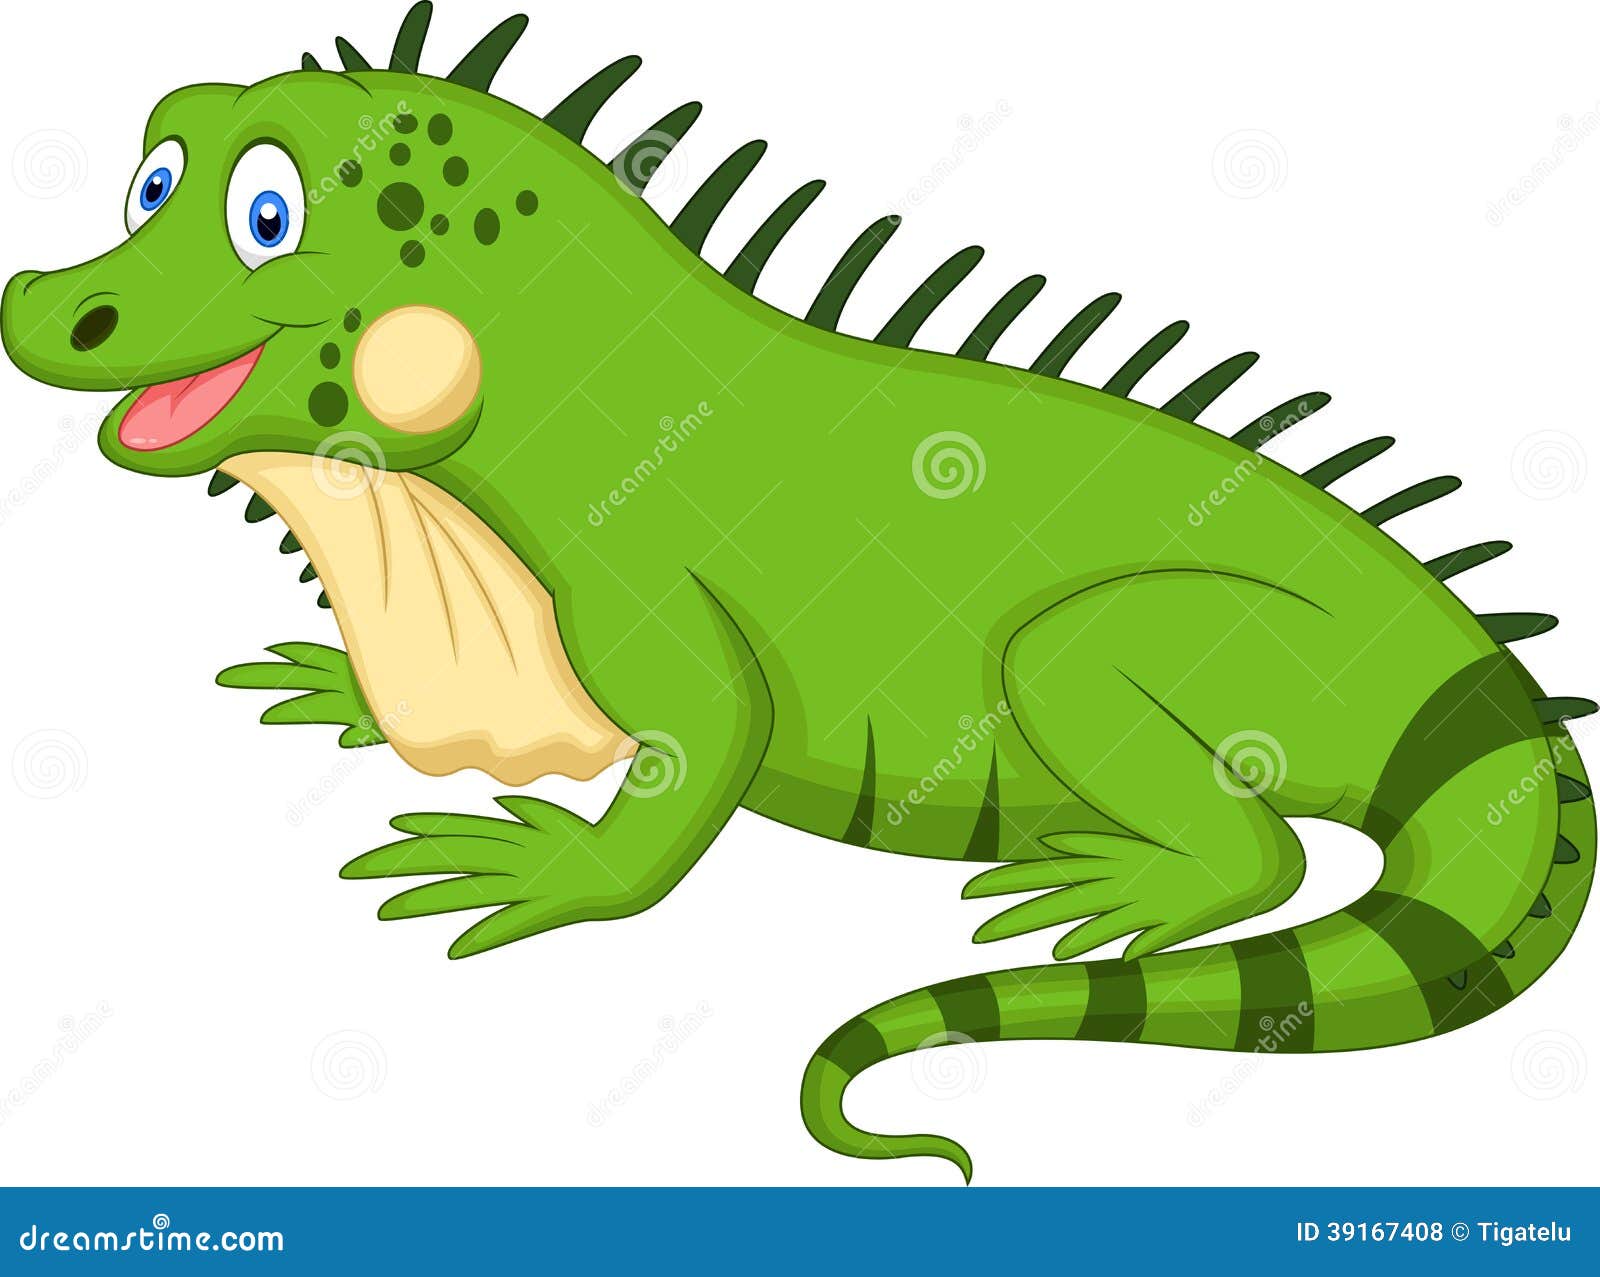 iguana illustrations clipart - photo #42